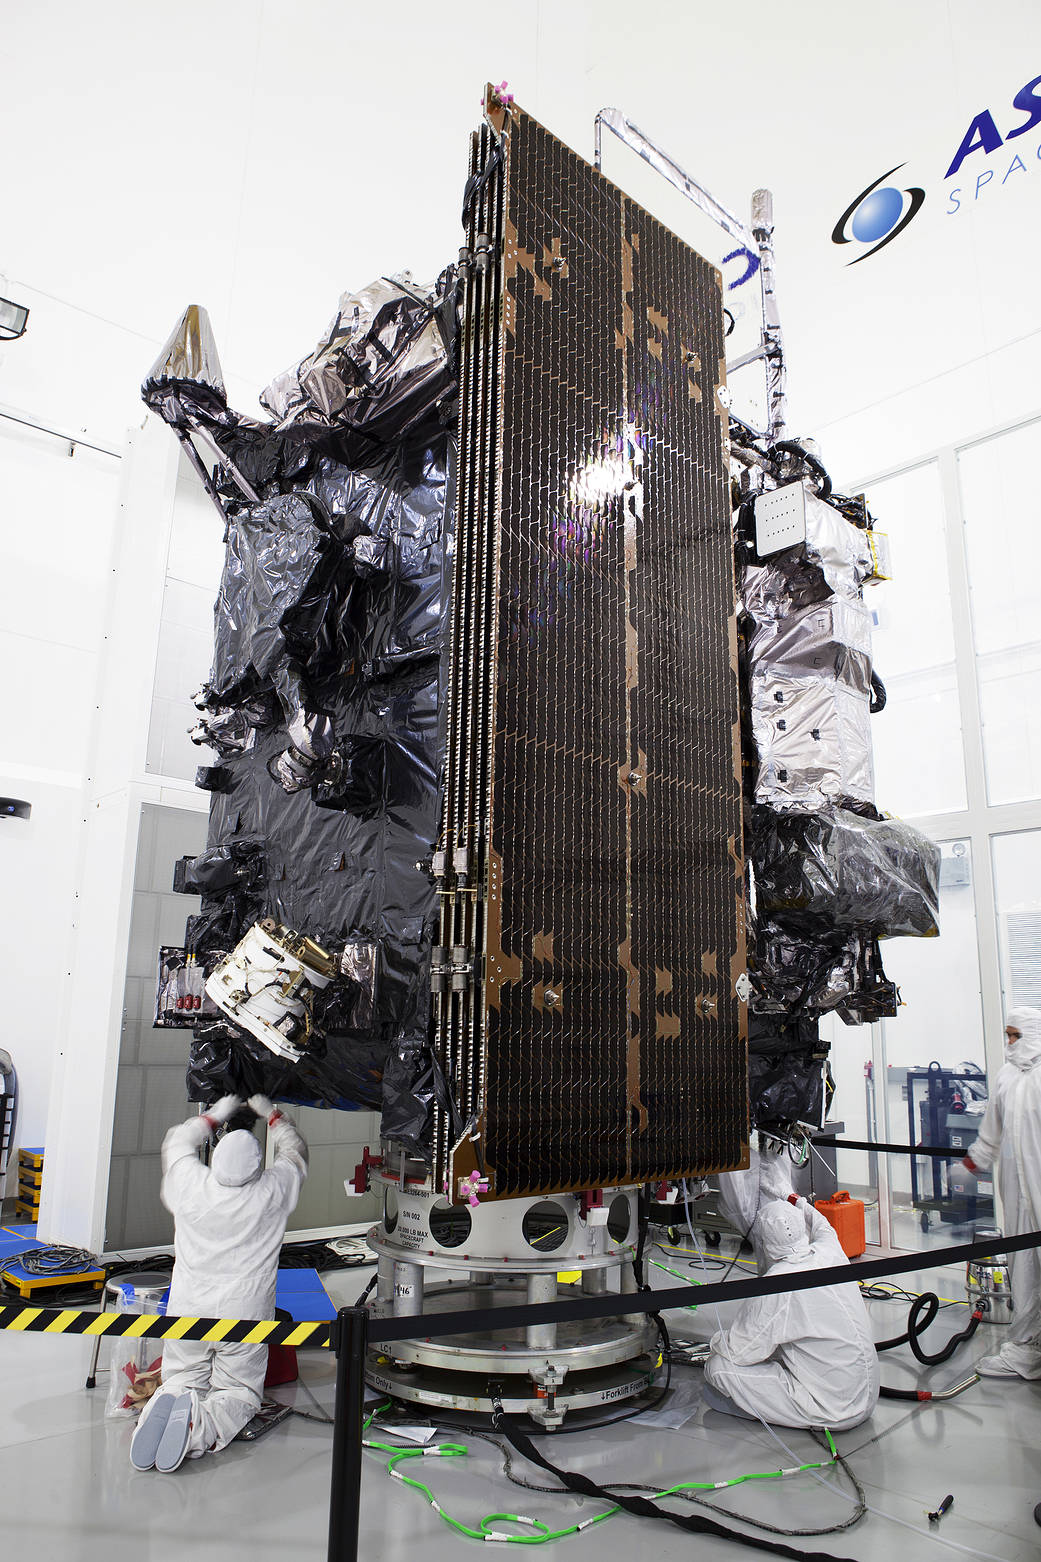 GOES-R Satellite Processing